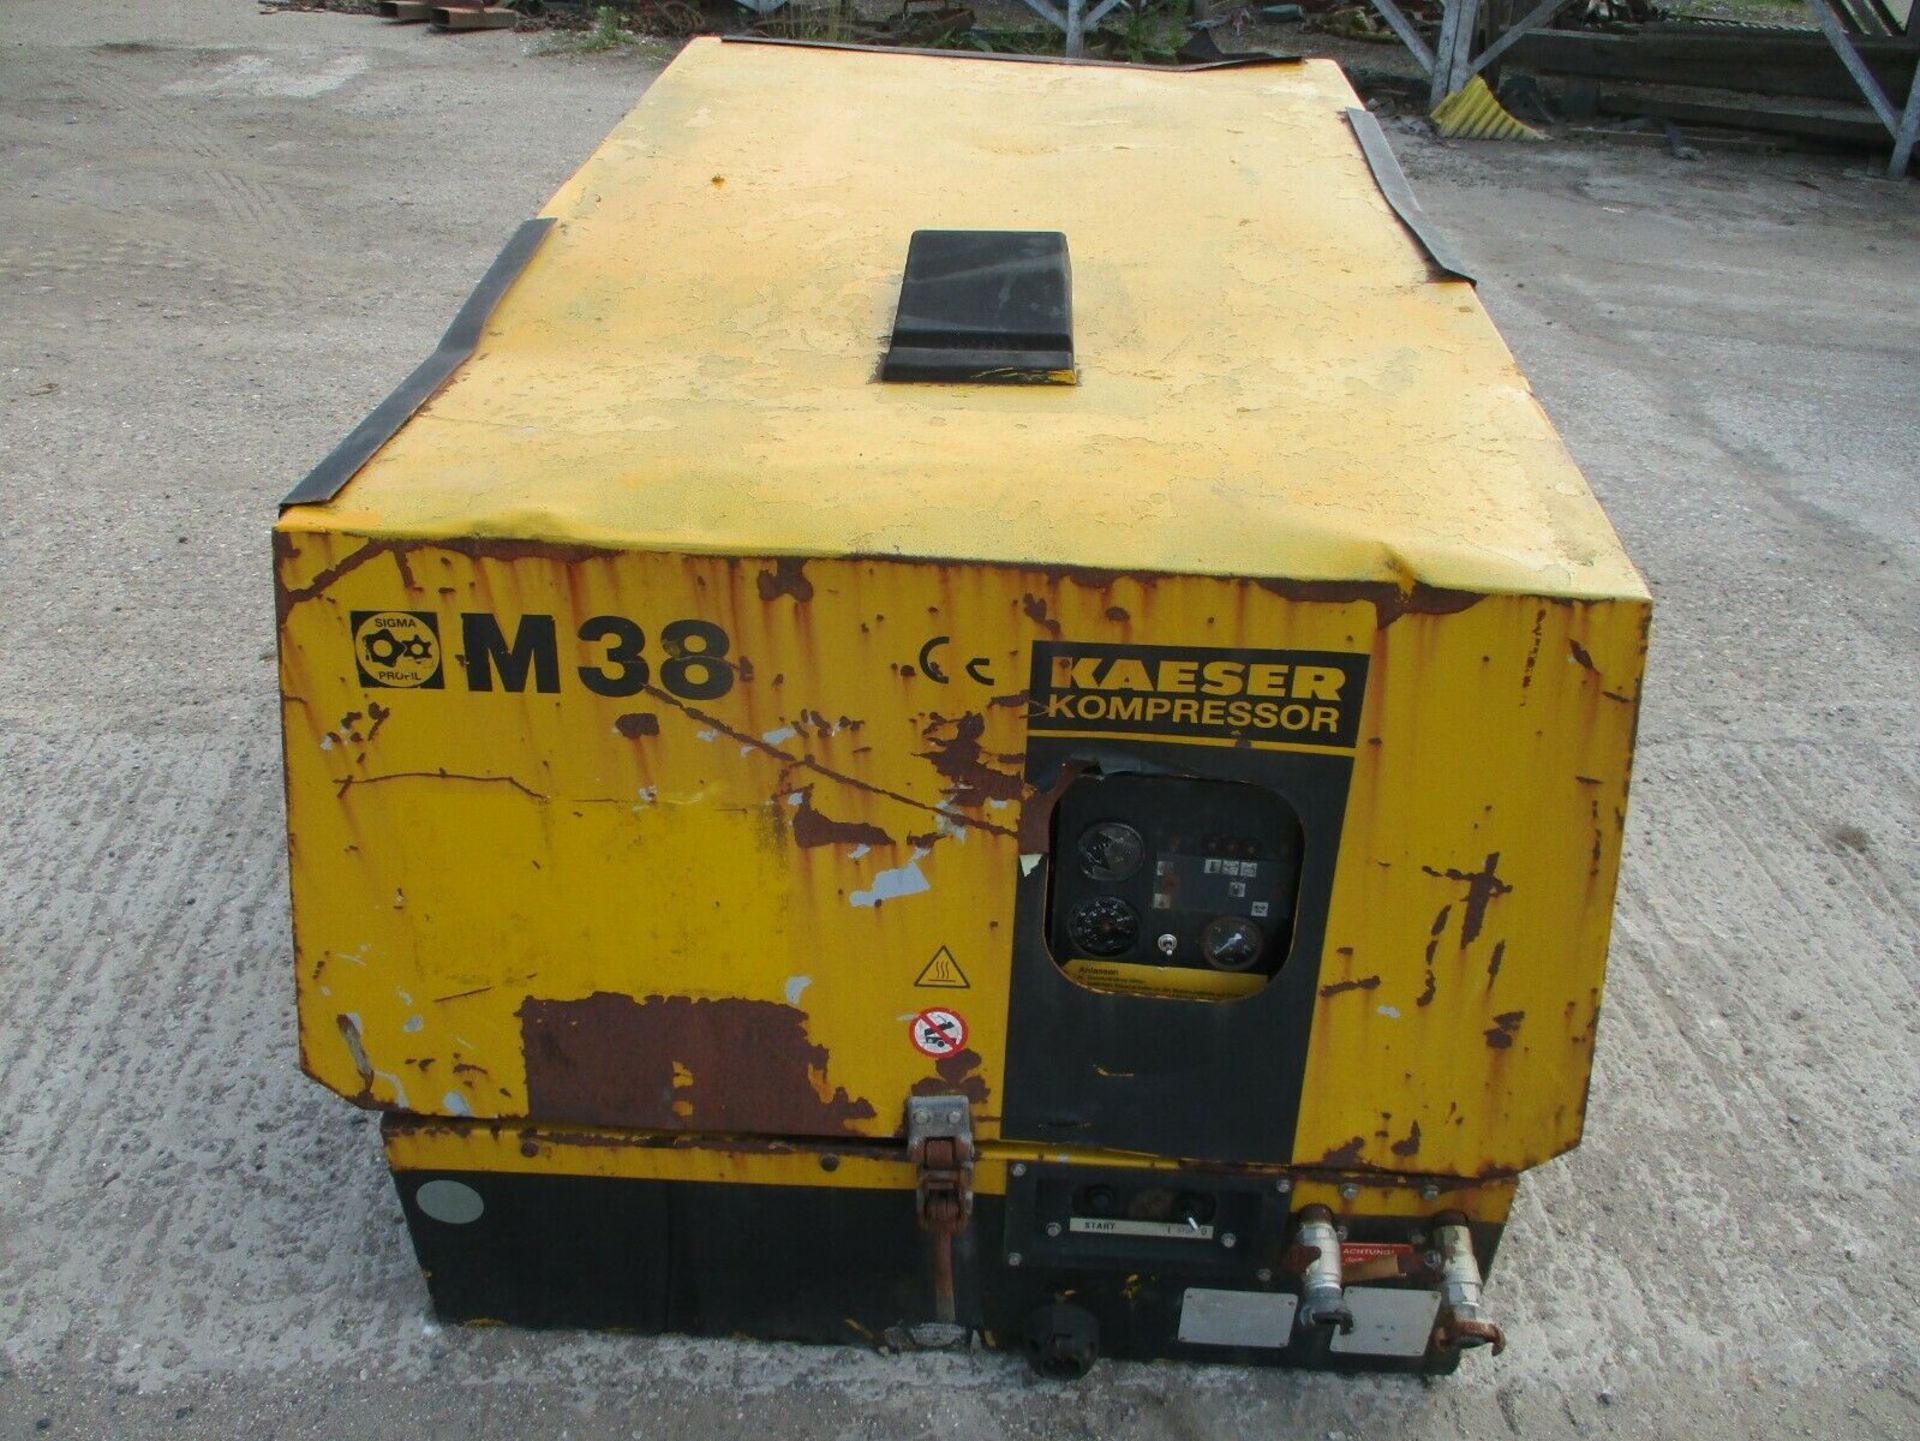 Kaeser M38 Compressor - Image 5 of 10